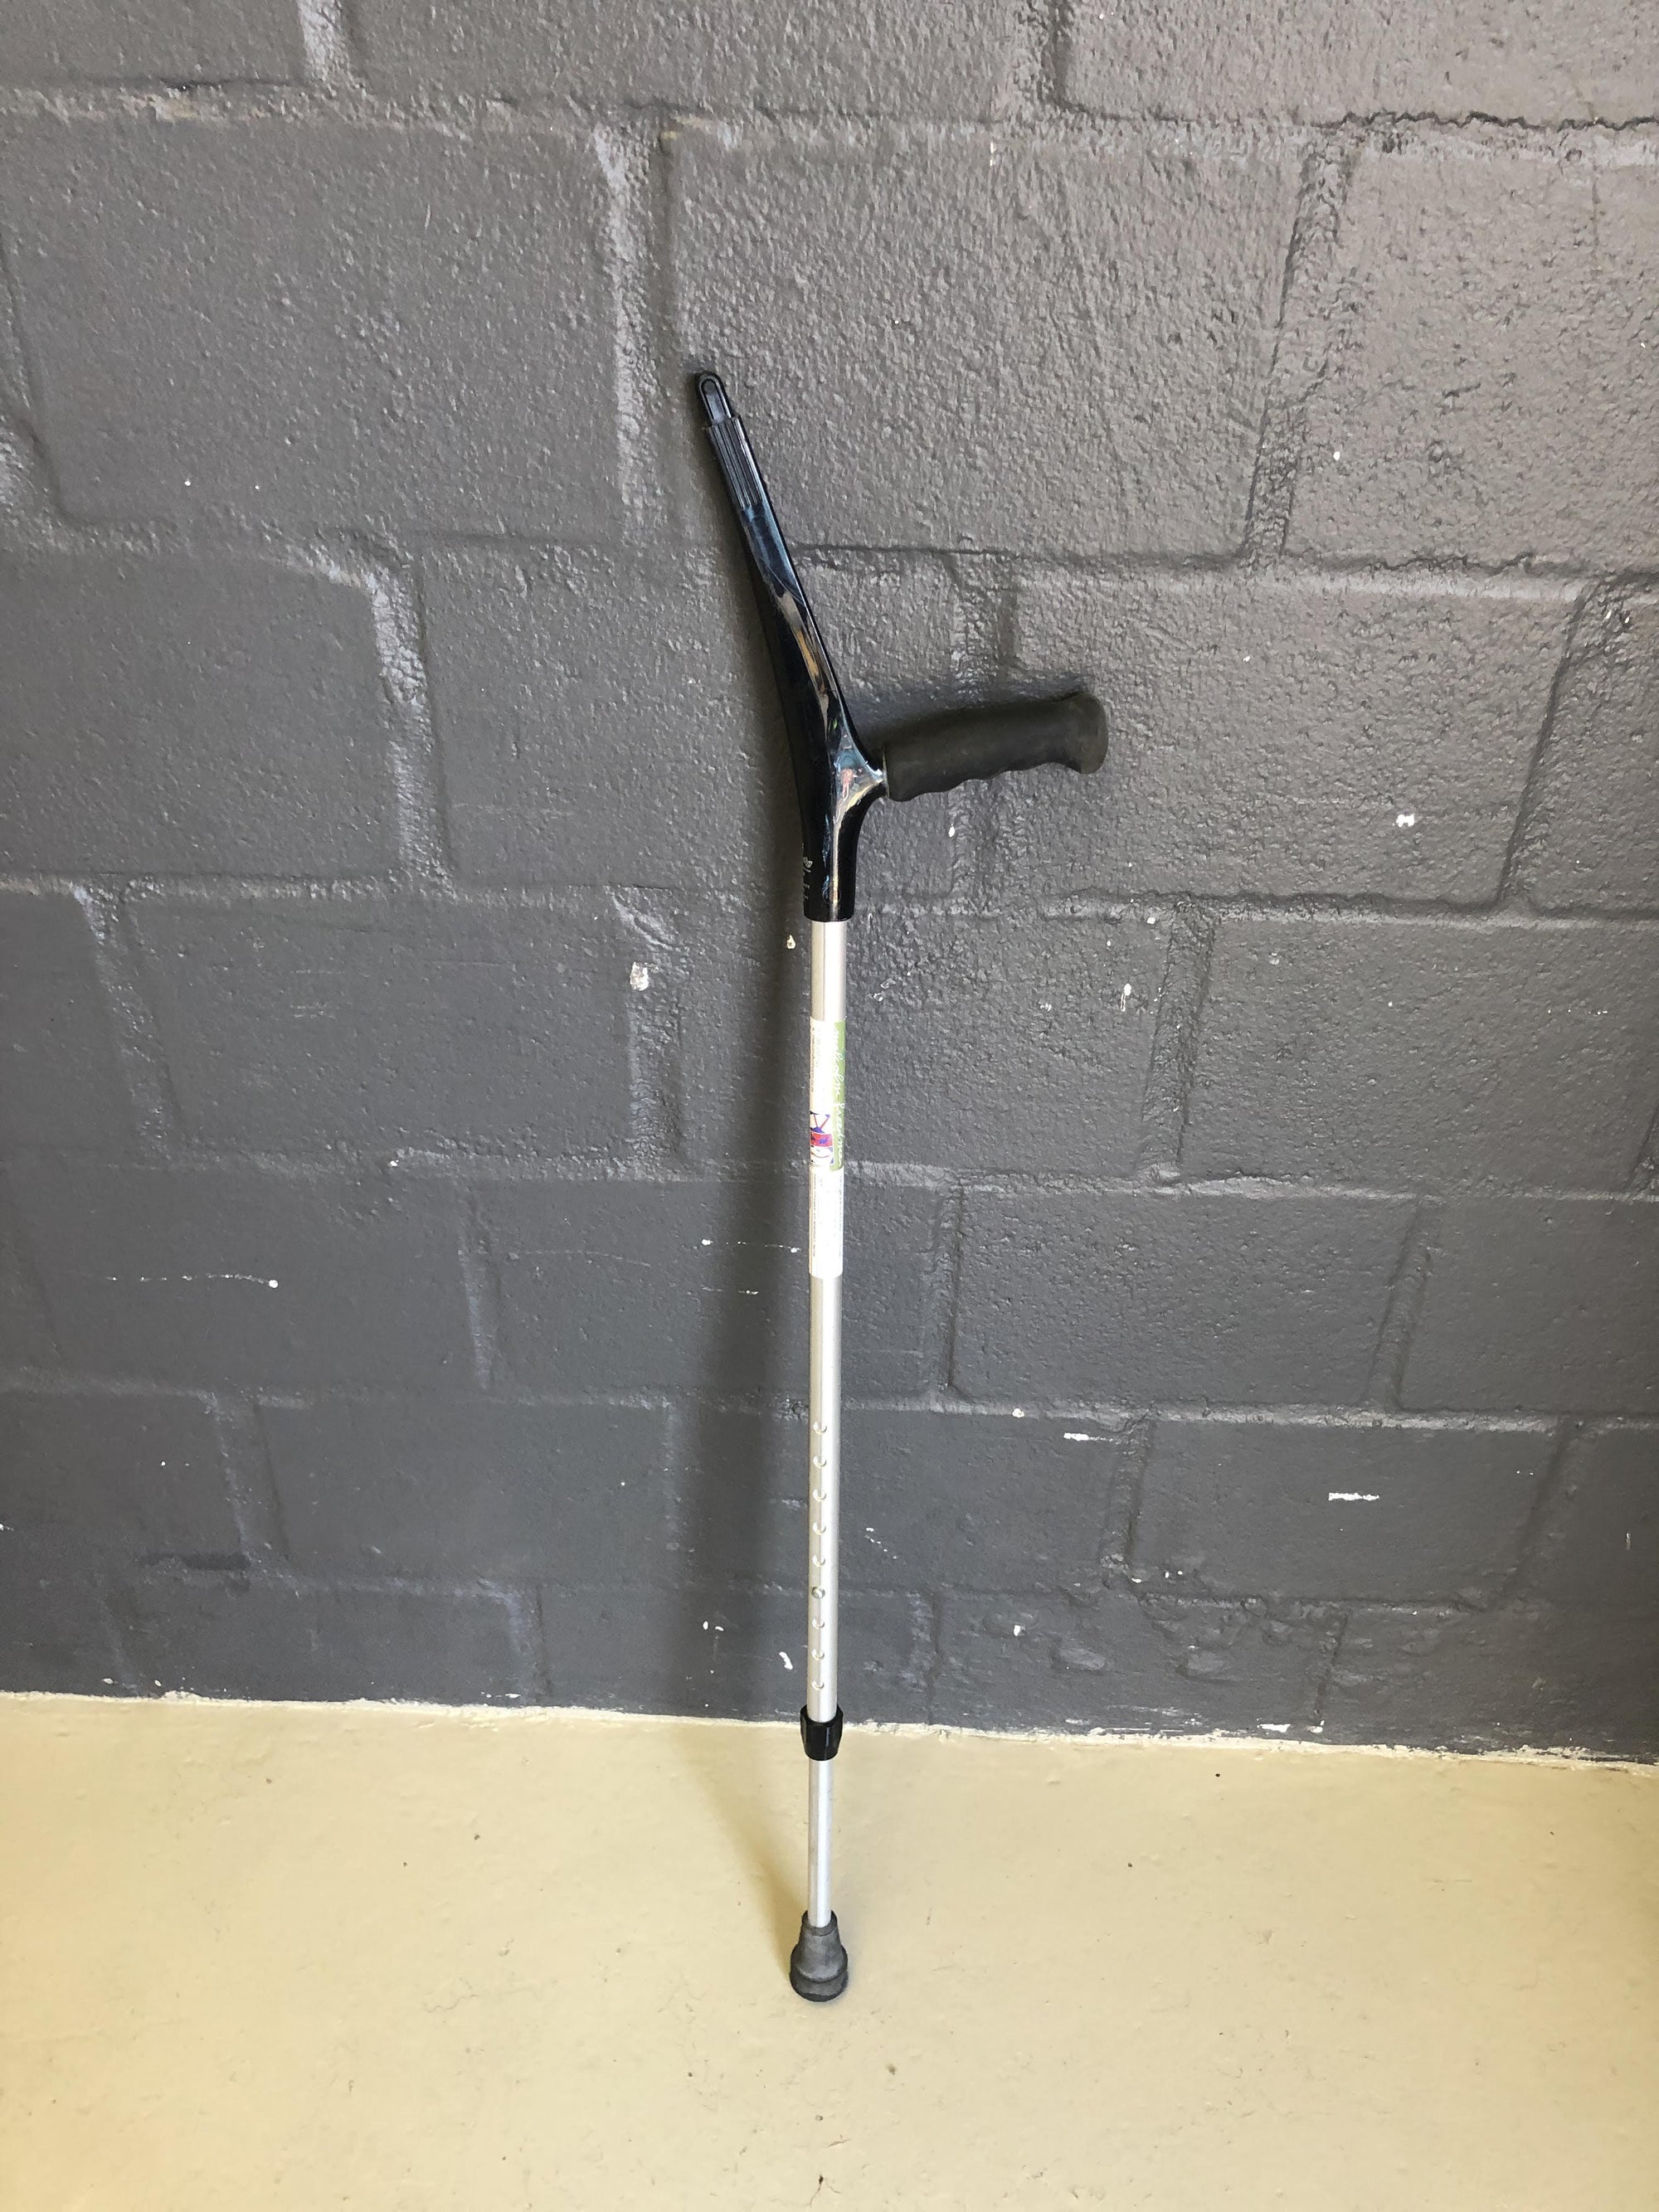 Crutch (Walking Stick) - 2ndhandwarehouse.com